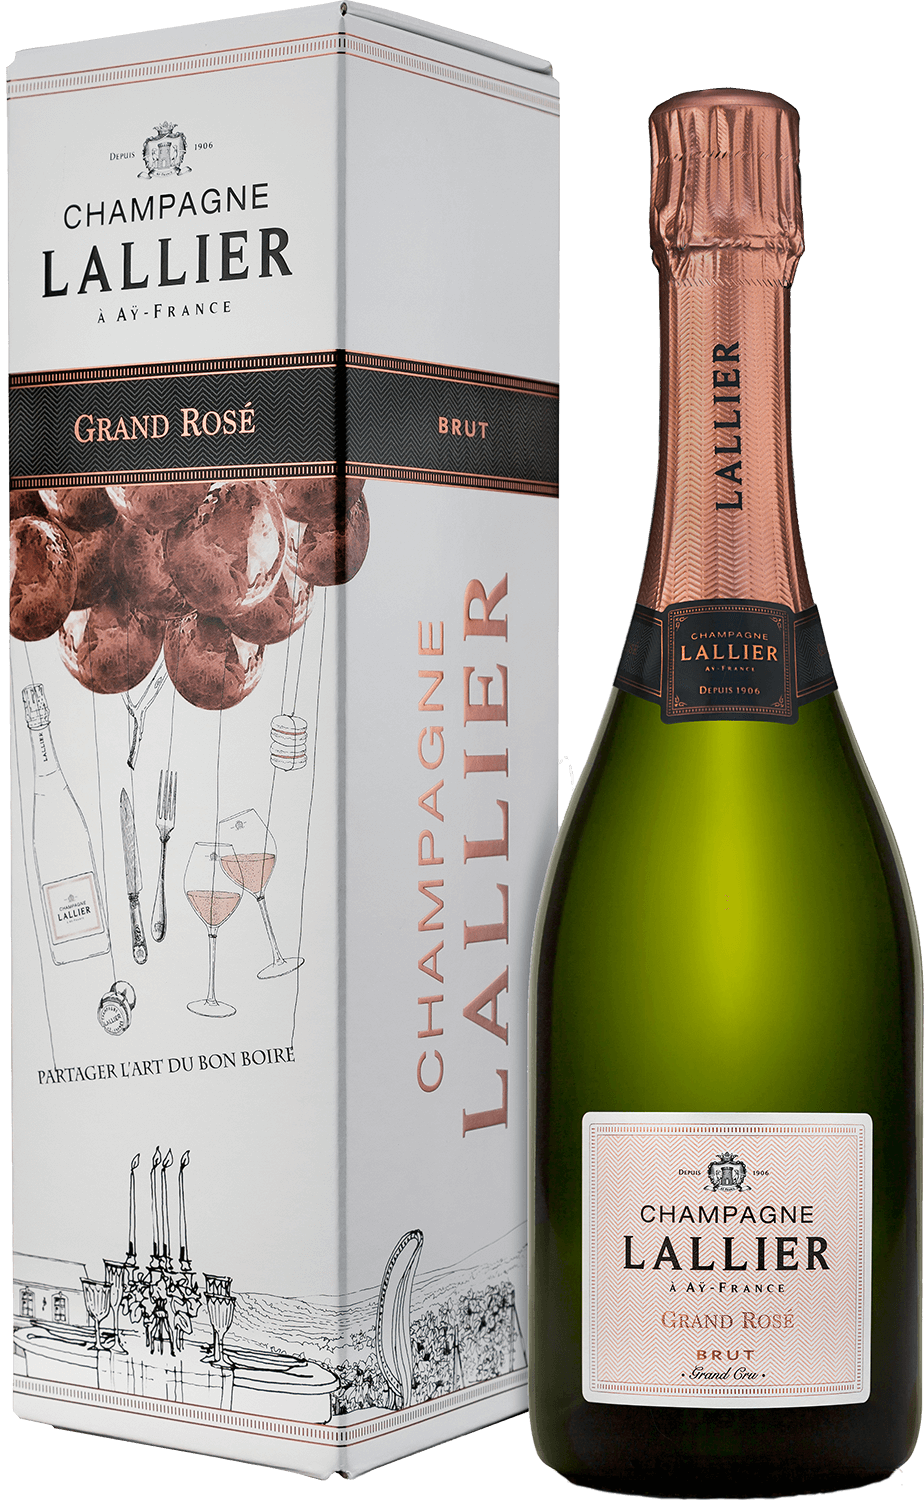 Lallier Grand Rose Brut Grand Cru Champagne AOC (gift box) mailly grand cru extra brut millesime champagne аос gift box